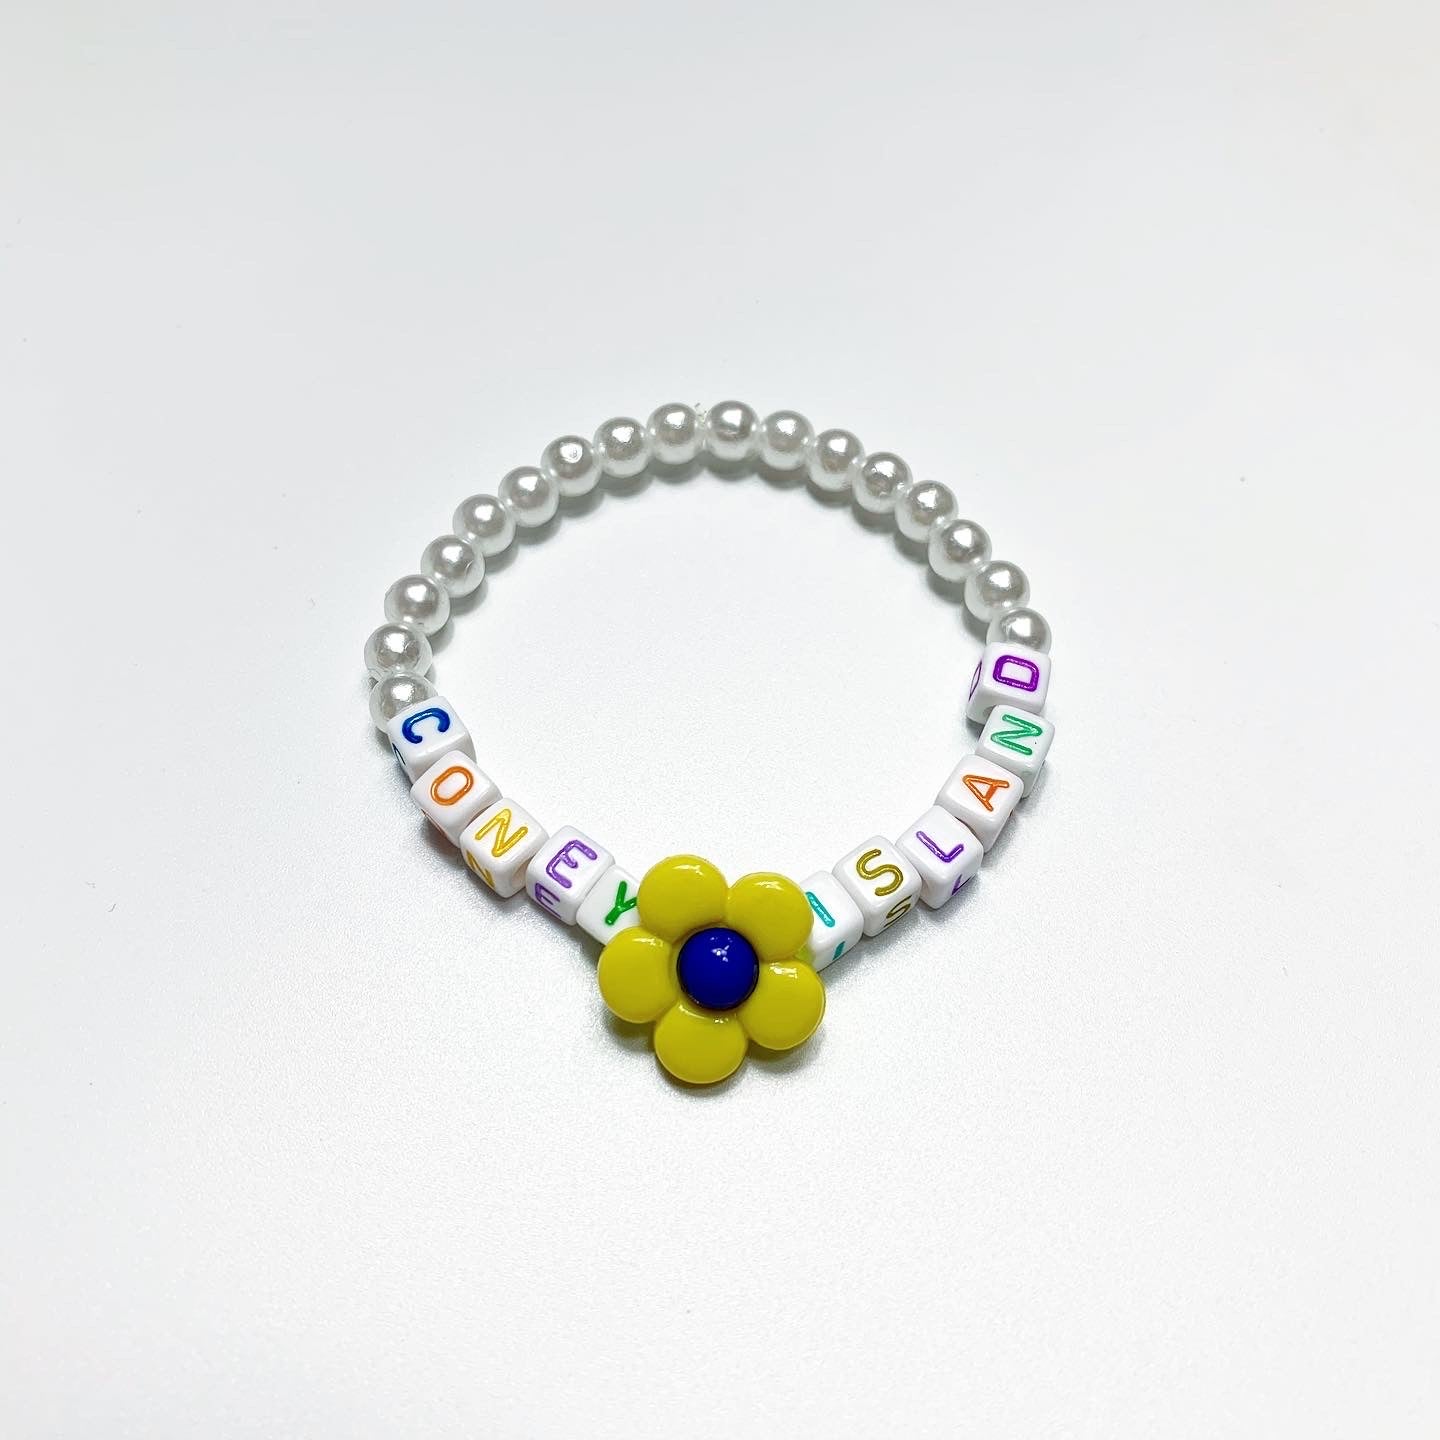 FUK'S SWEETHEART Beads Bracelet "CONEY ISLAND"